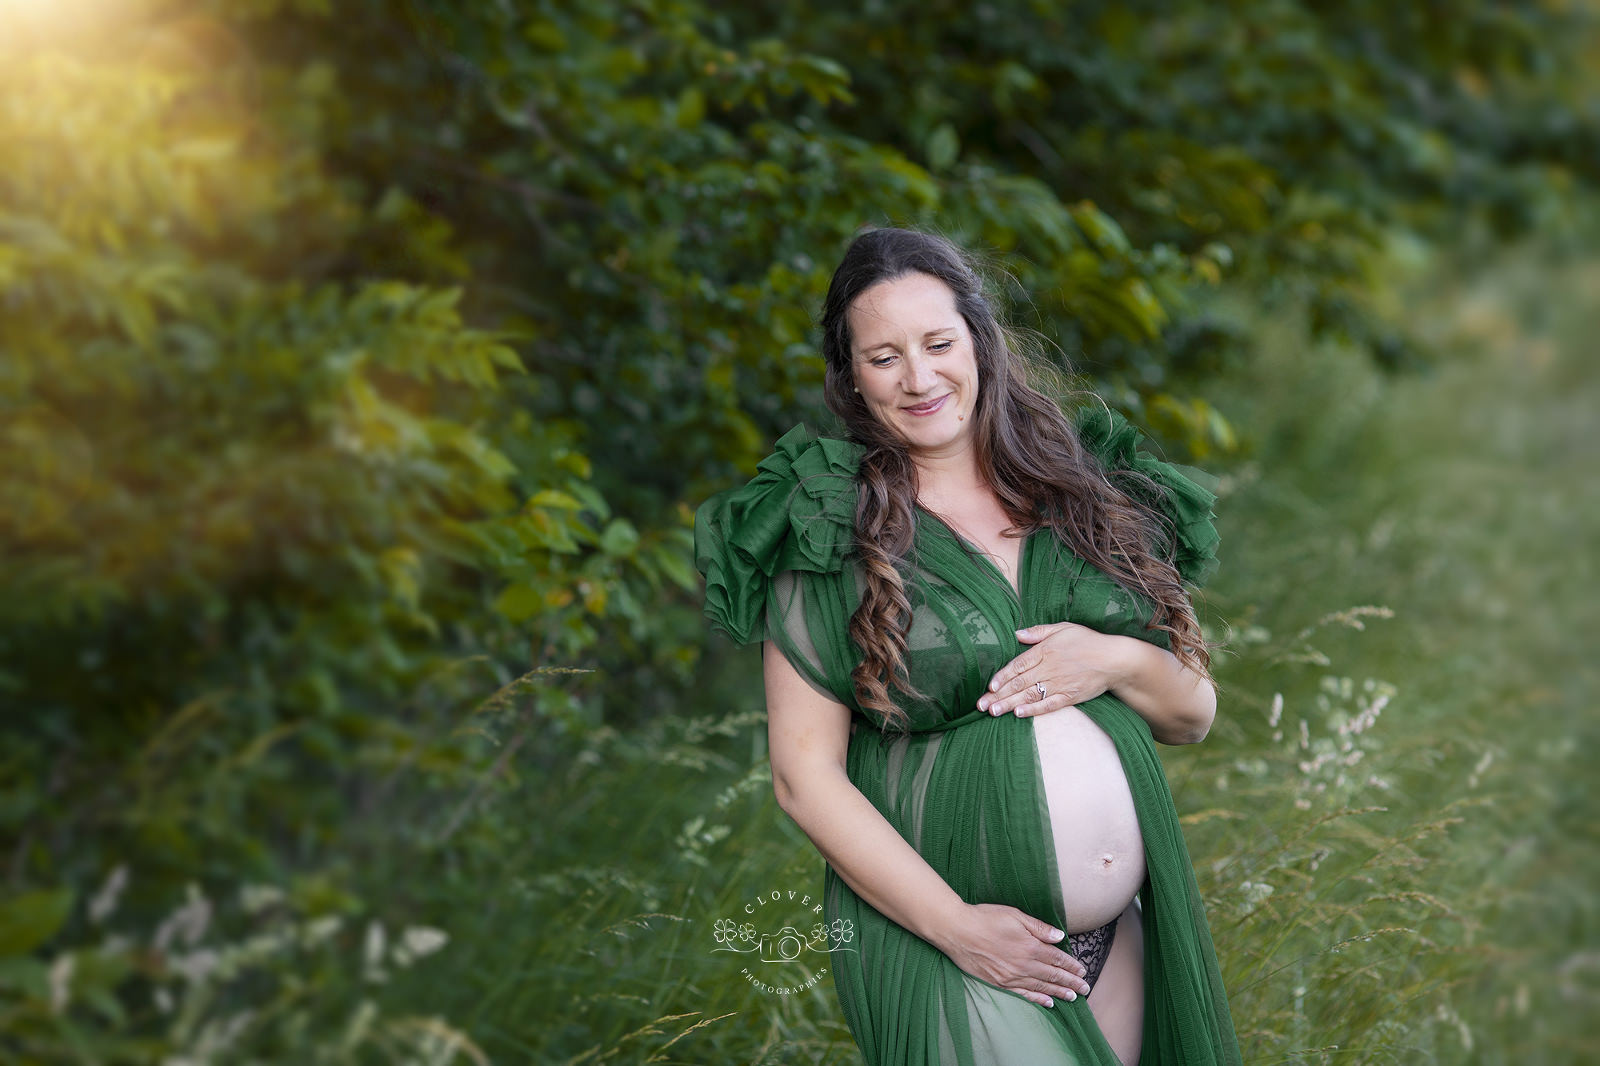 séance photo grossesse, femme enceinte shooting photo, photographe strasbourg obernai molsheim clover photographies